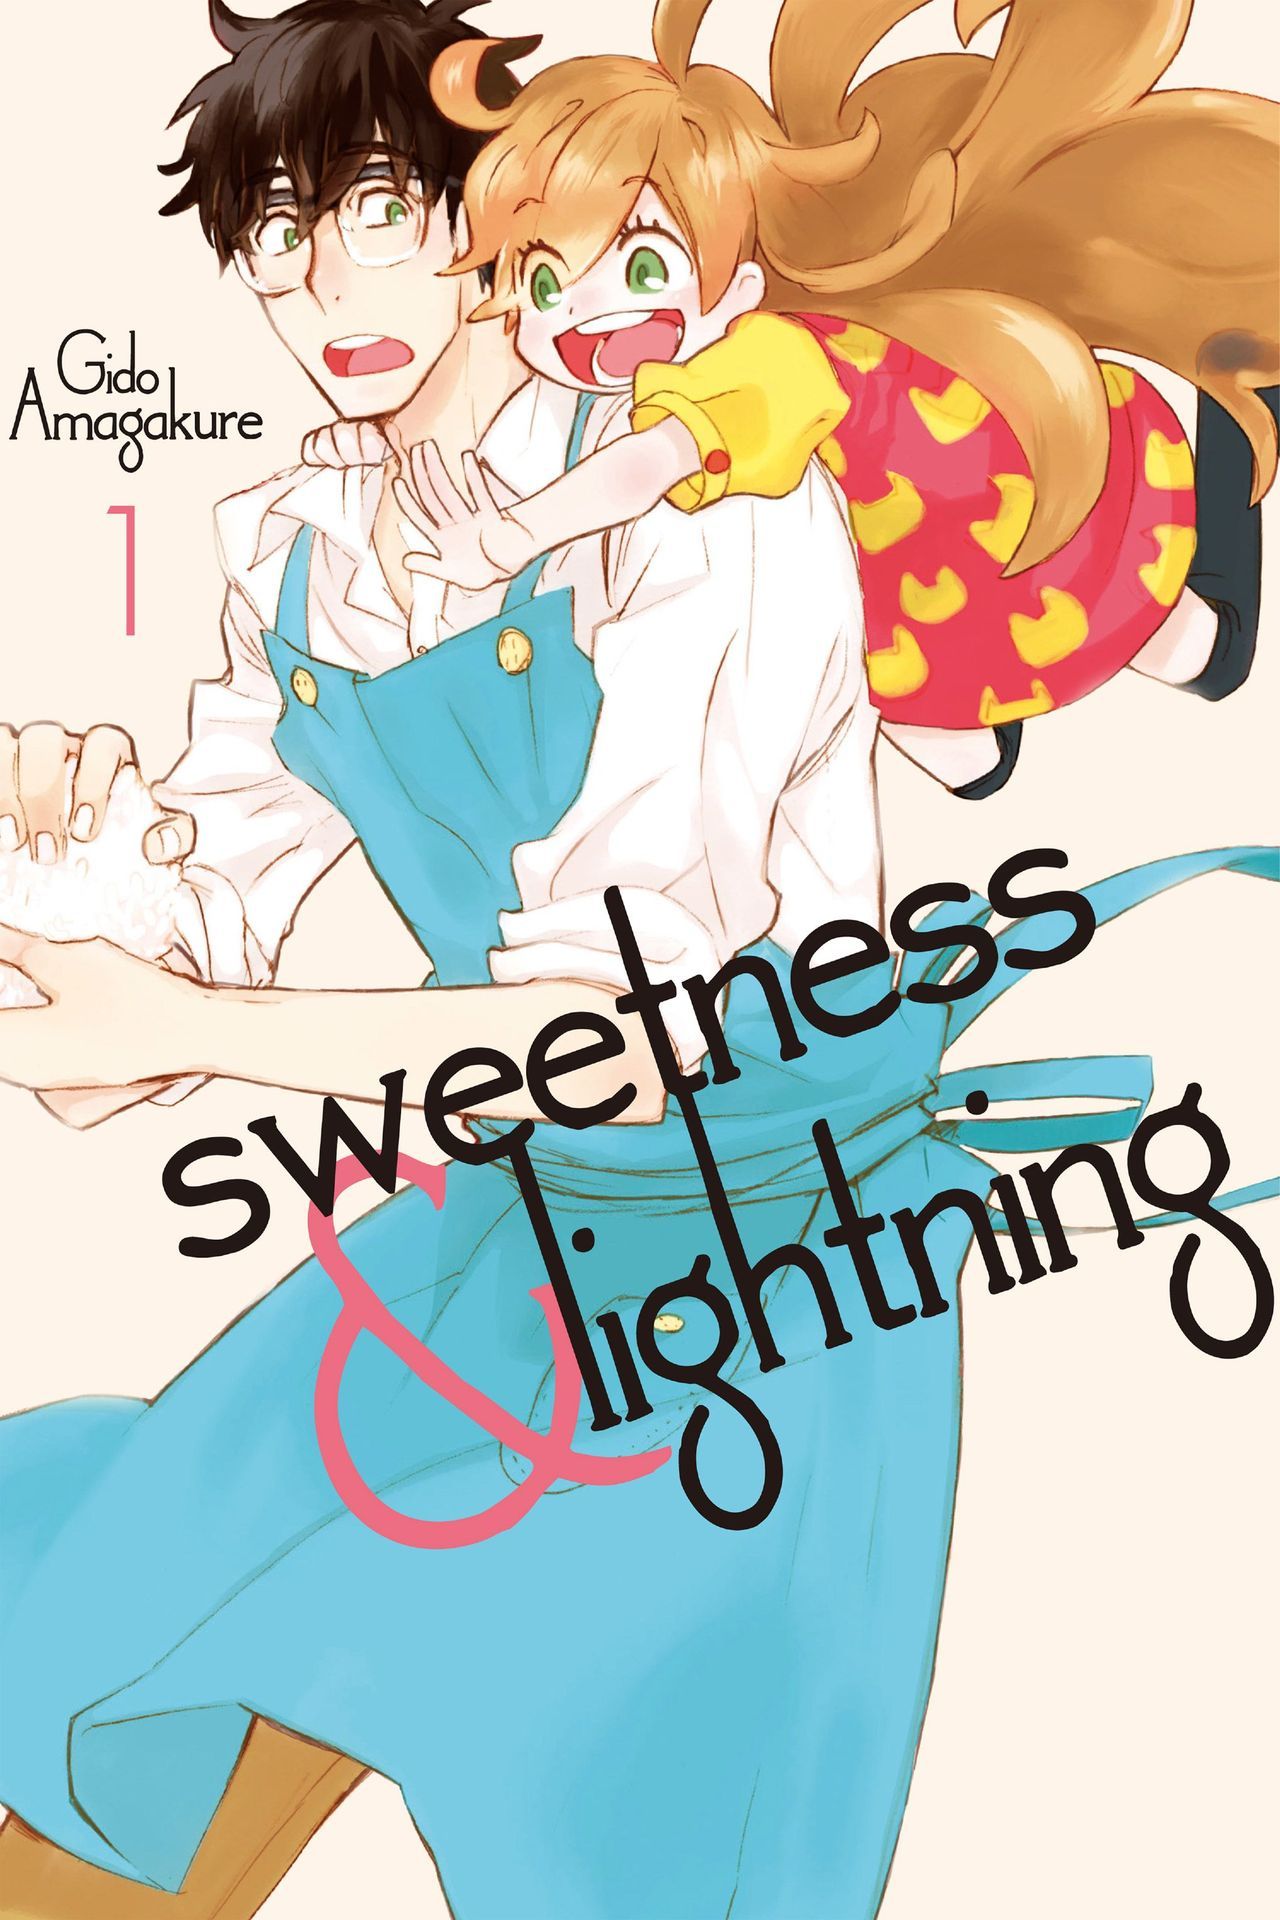 Gido Amagakureâs manga series âAmaama to Inazumaâ (Sweetness & Lightning) will come to an end in the next issue of Good! Afternoon magazine; on sale August 7th.